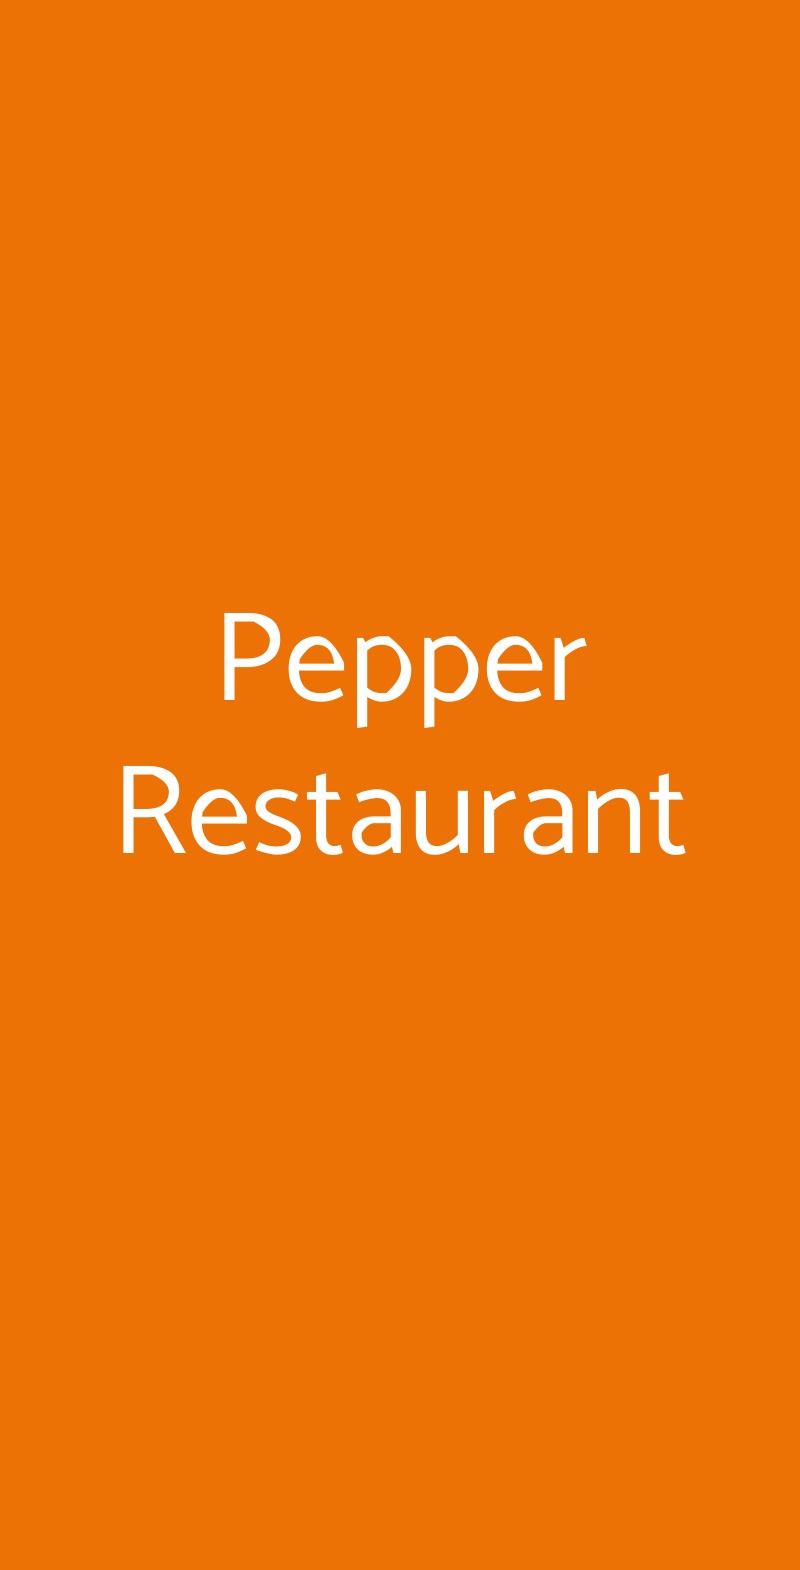 Pepper Restaurant Roma menù 1 pagina